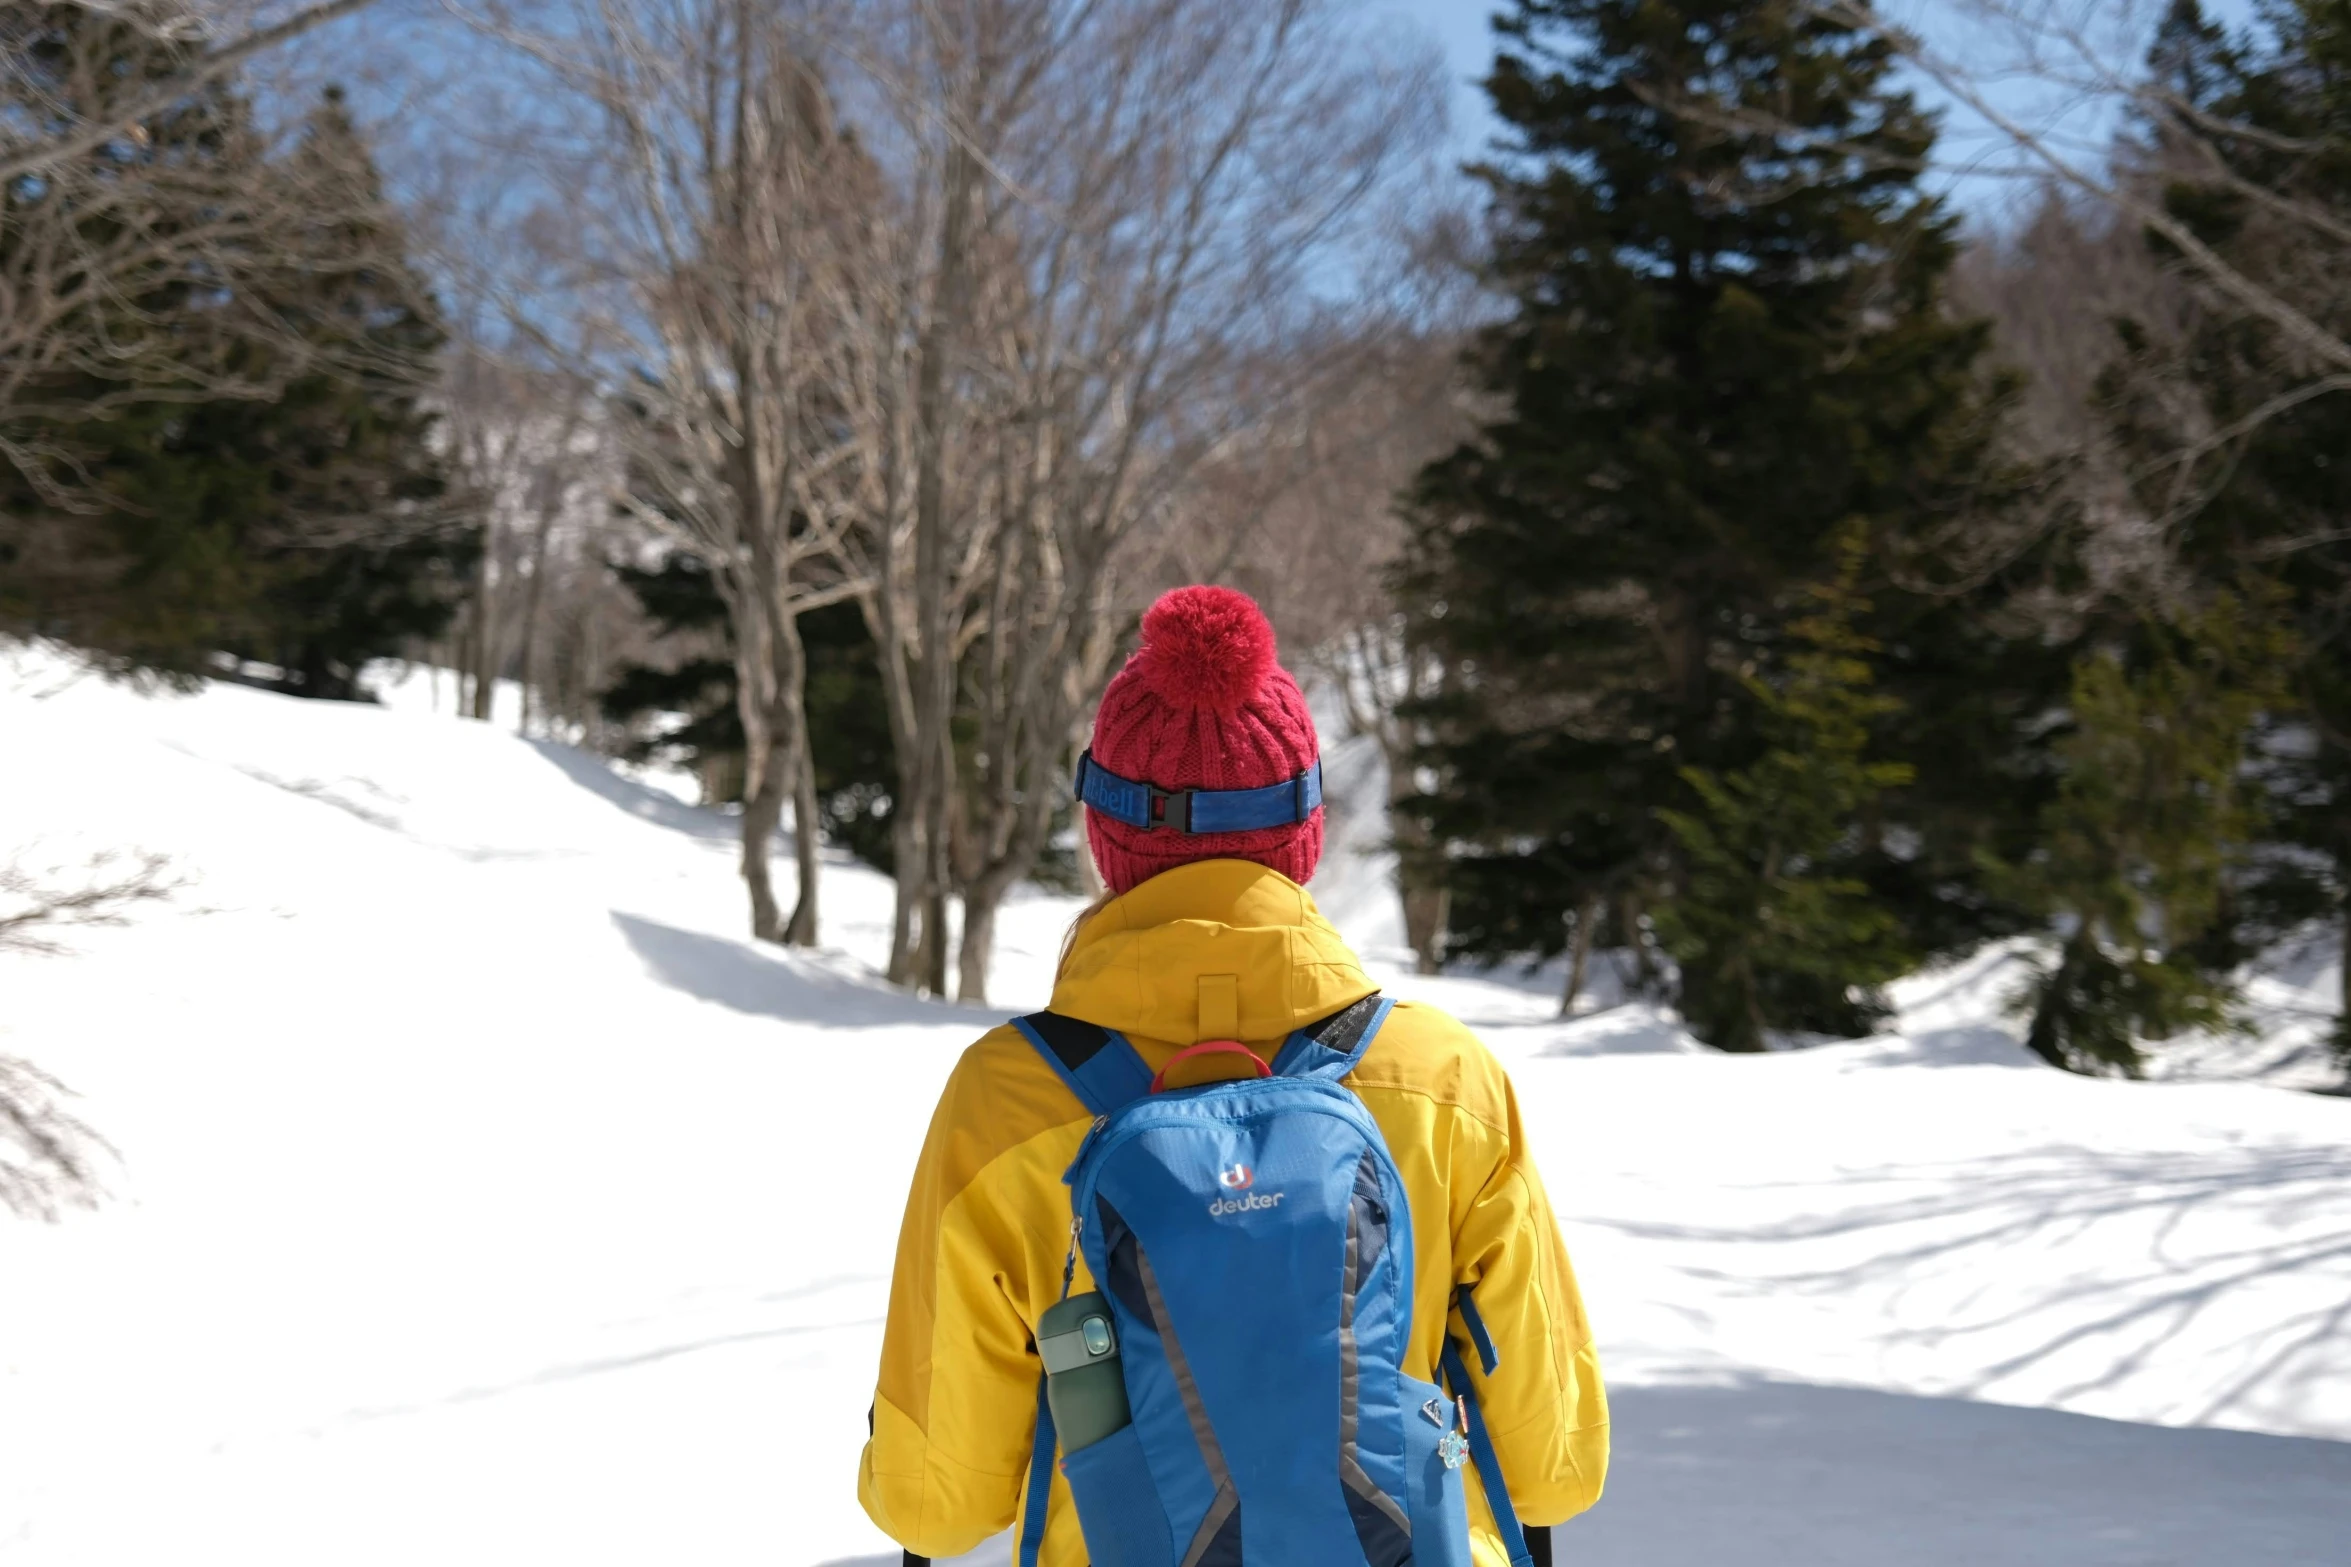 the back view of a man walking across a snowy field